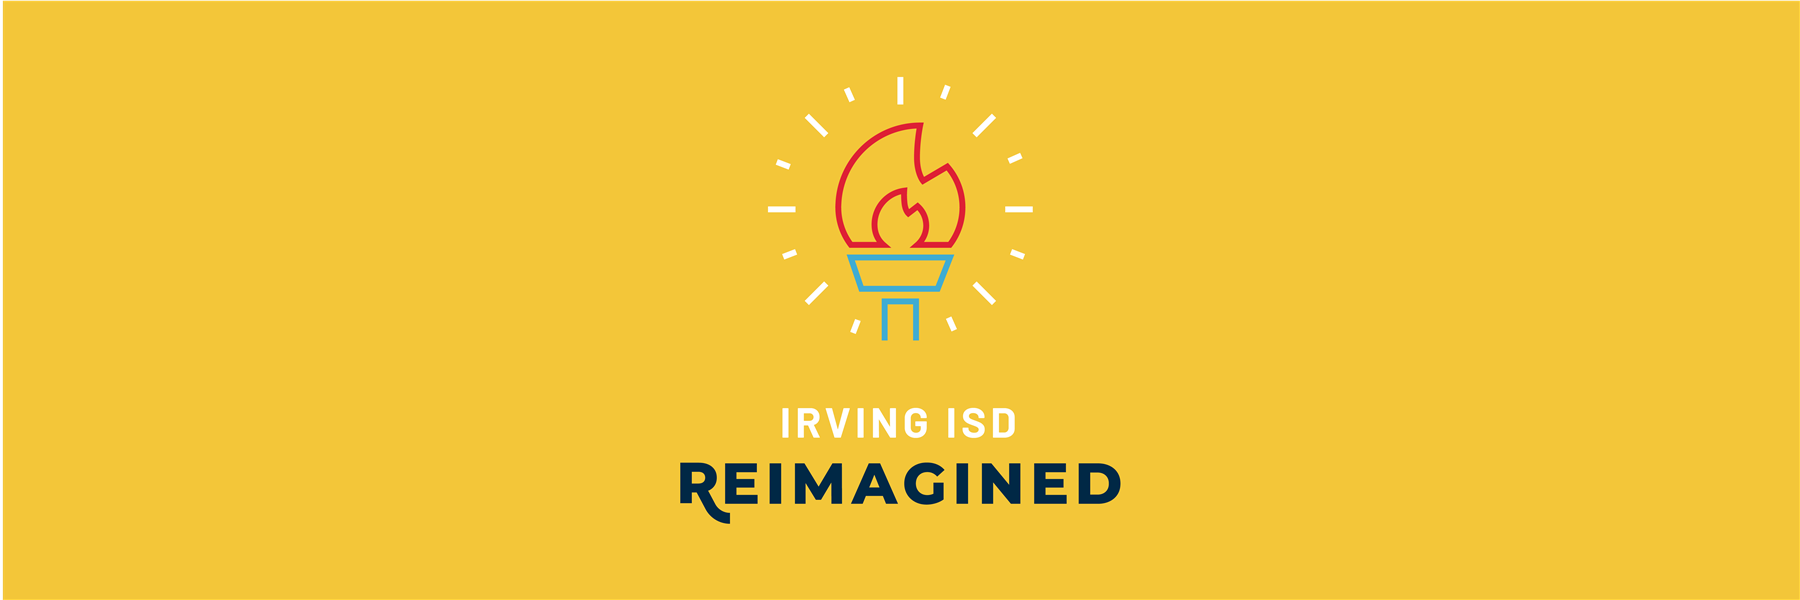 Irving ISD Reimagined